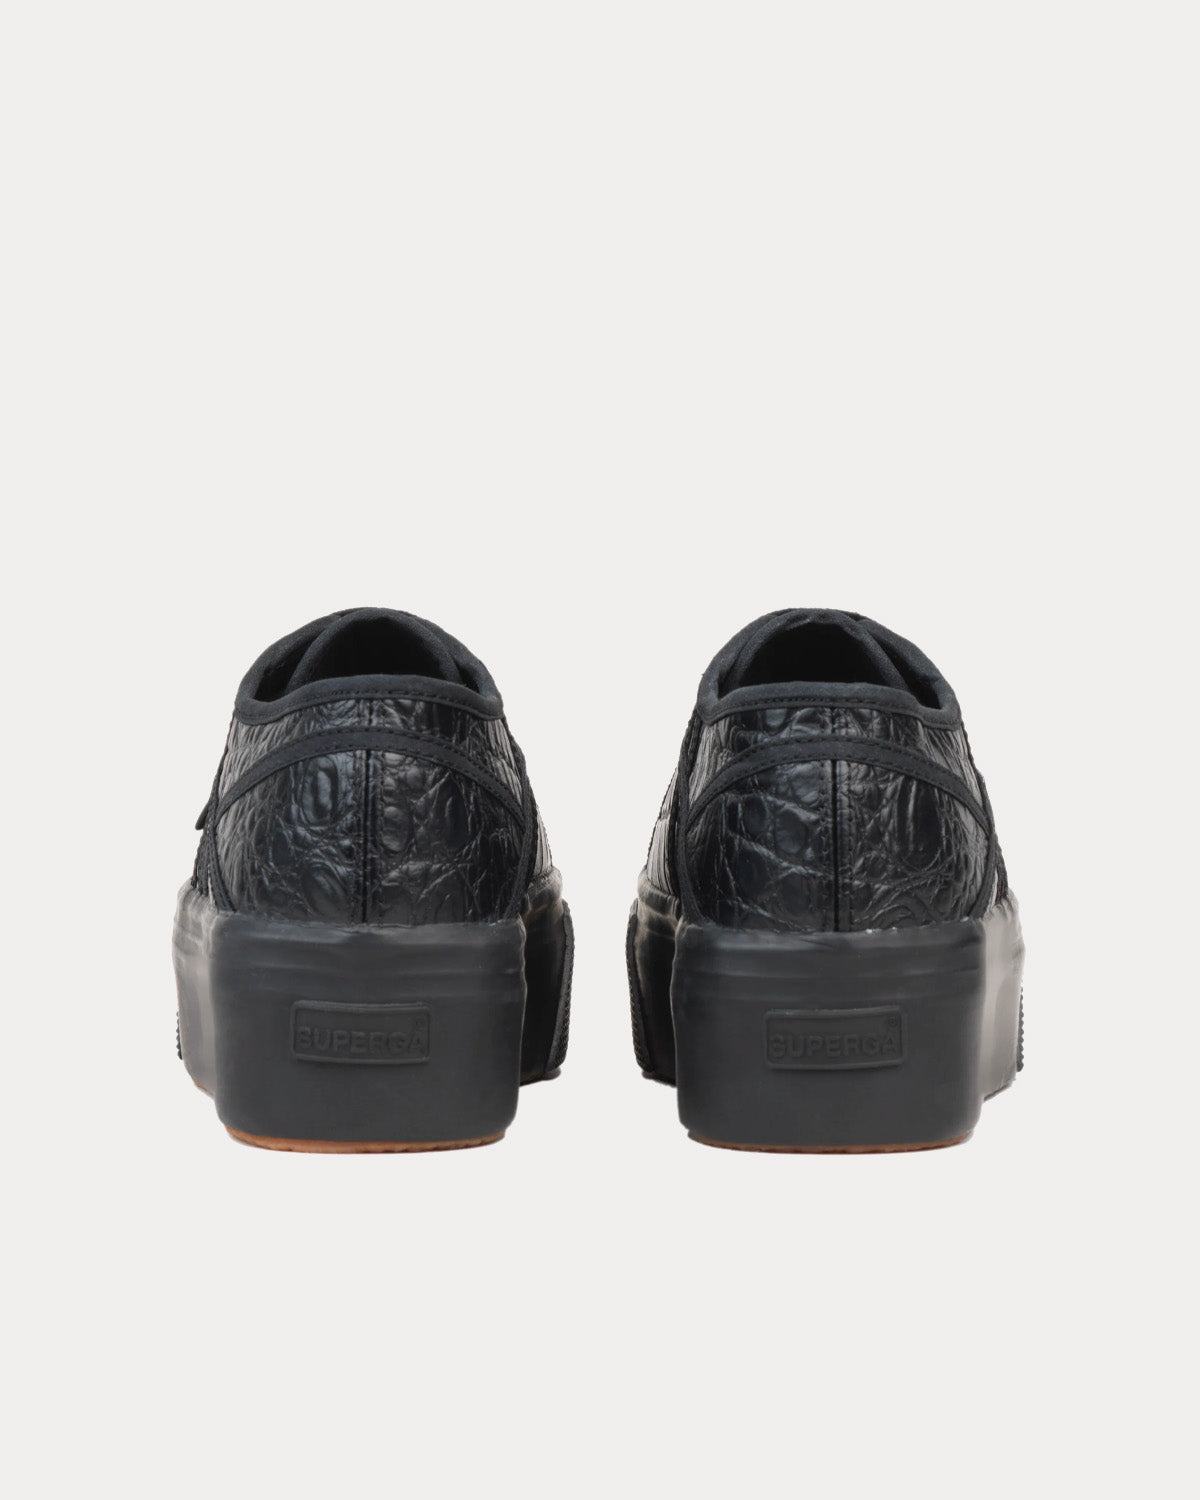 Alaïa x Superga - Platform Black Low Top Sneakers